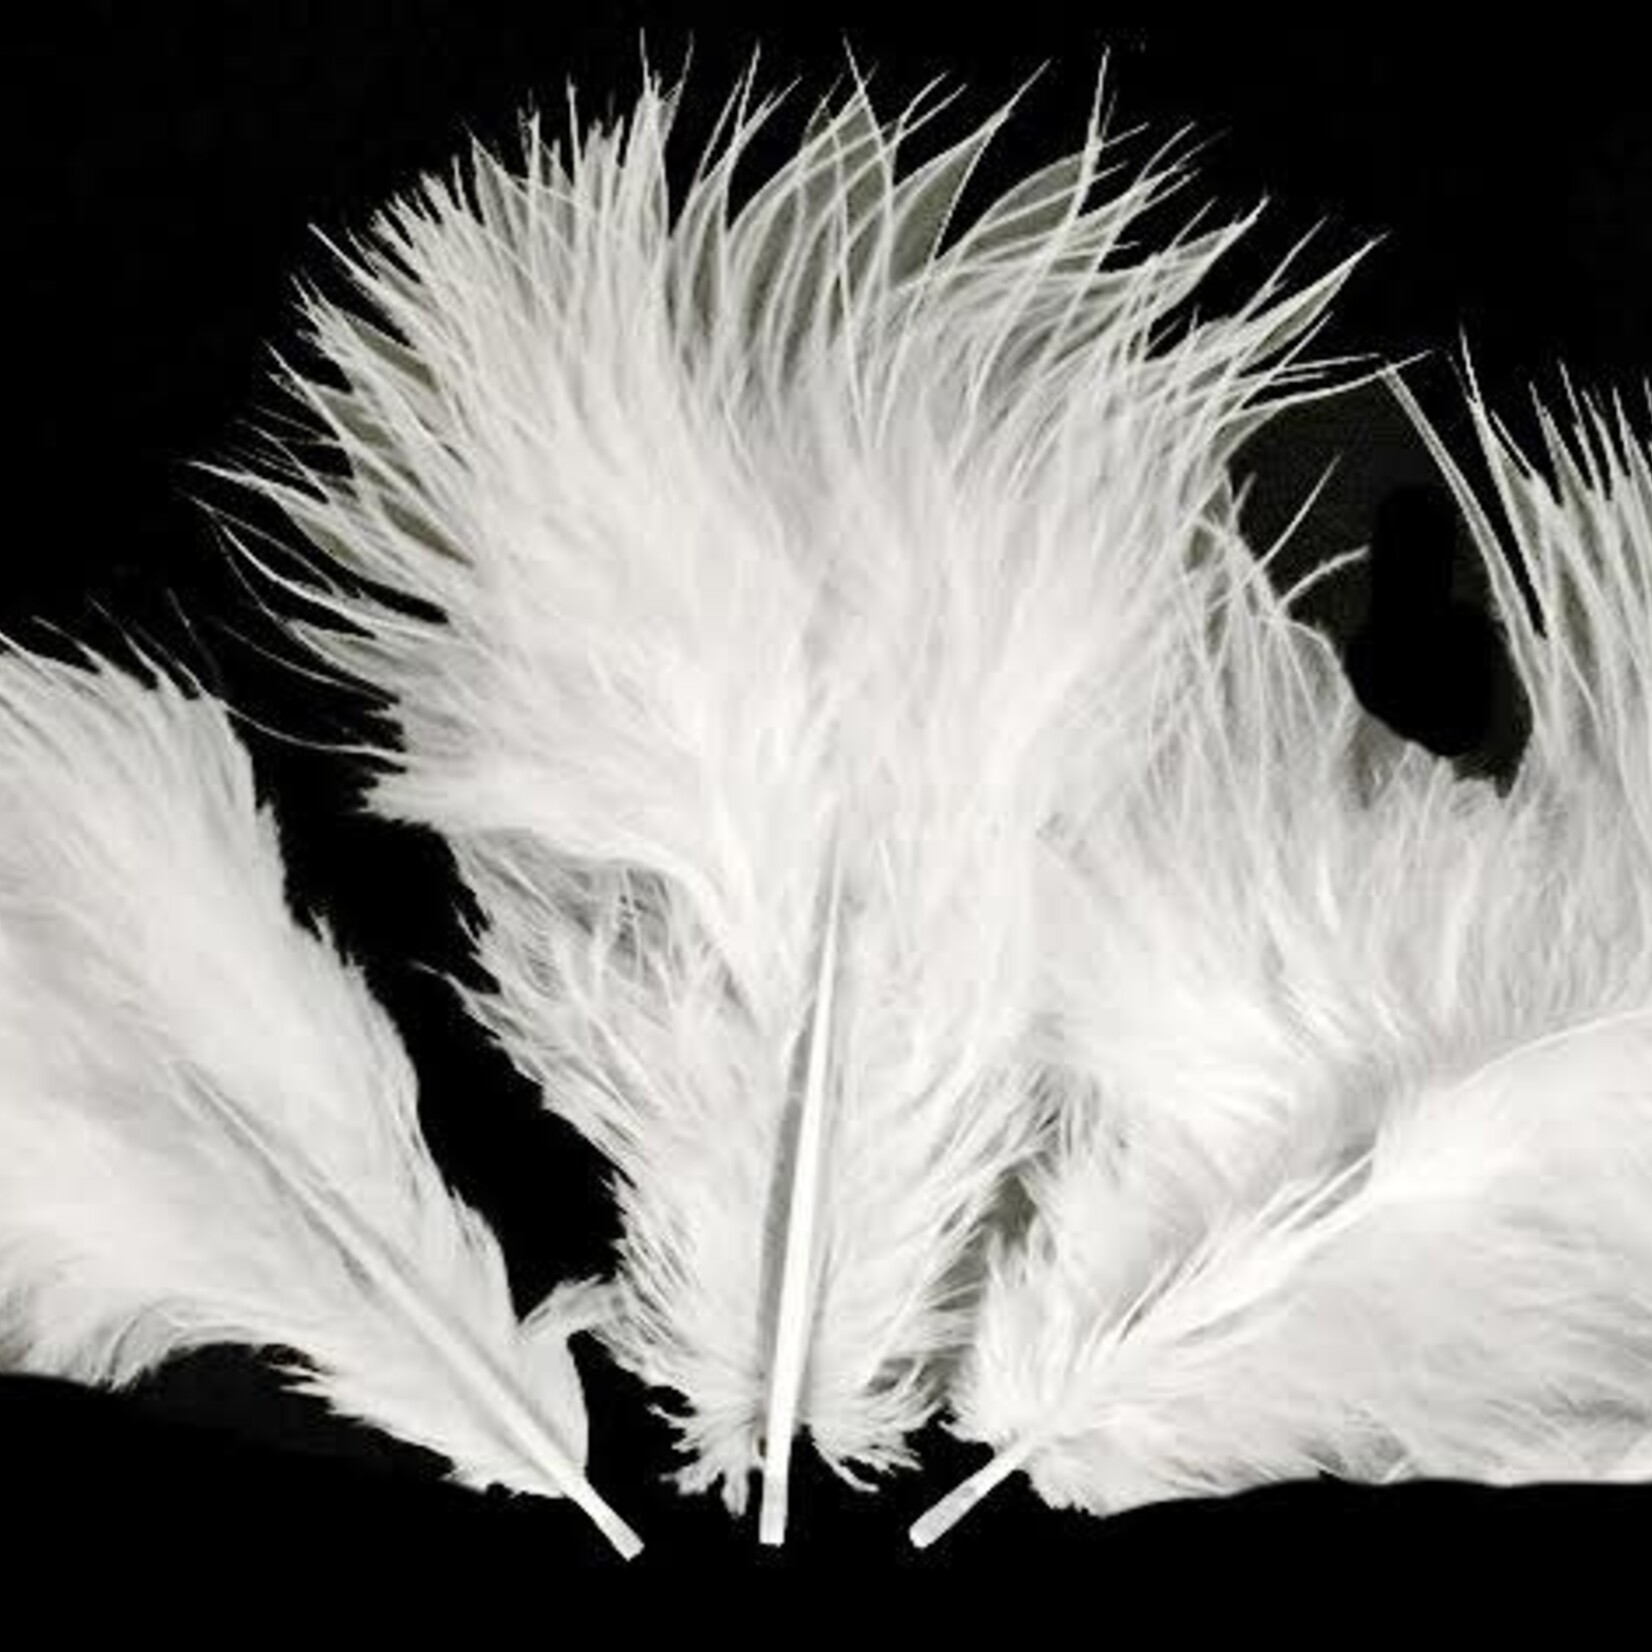 Marabou Fluff Feathers 4-7 Inch 0.5LB